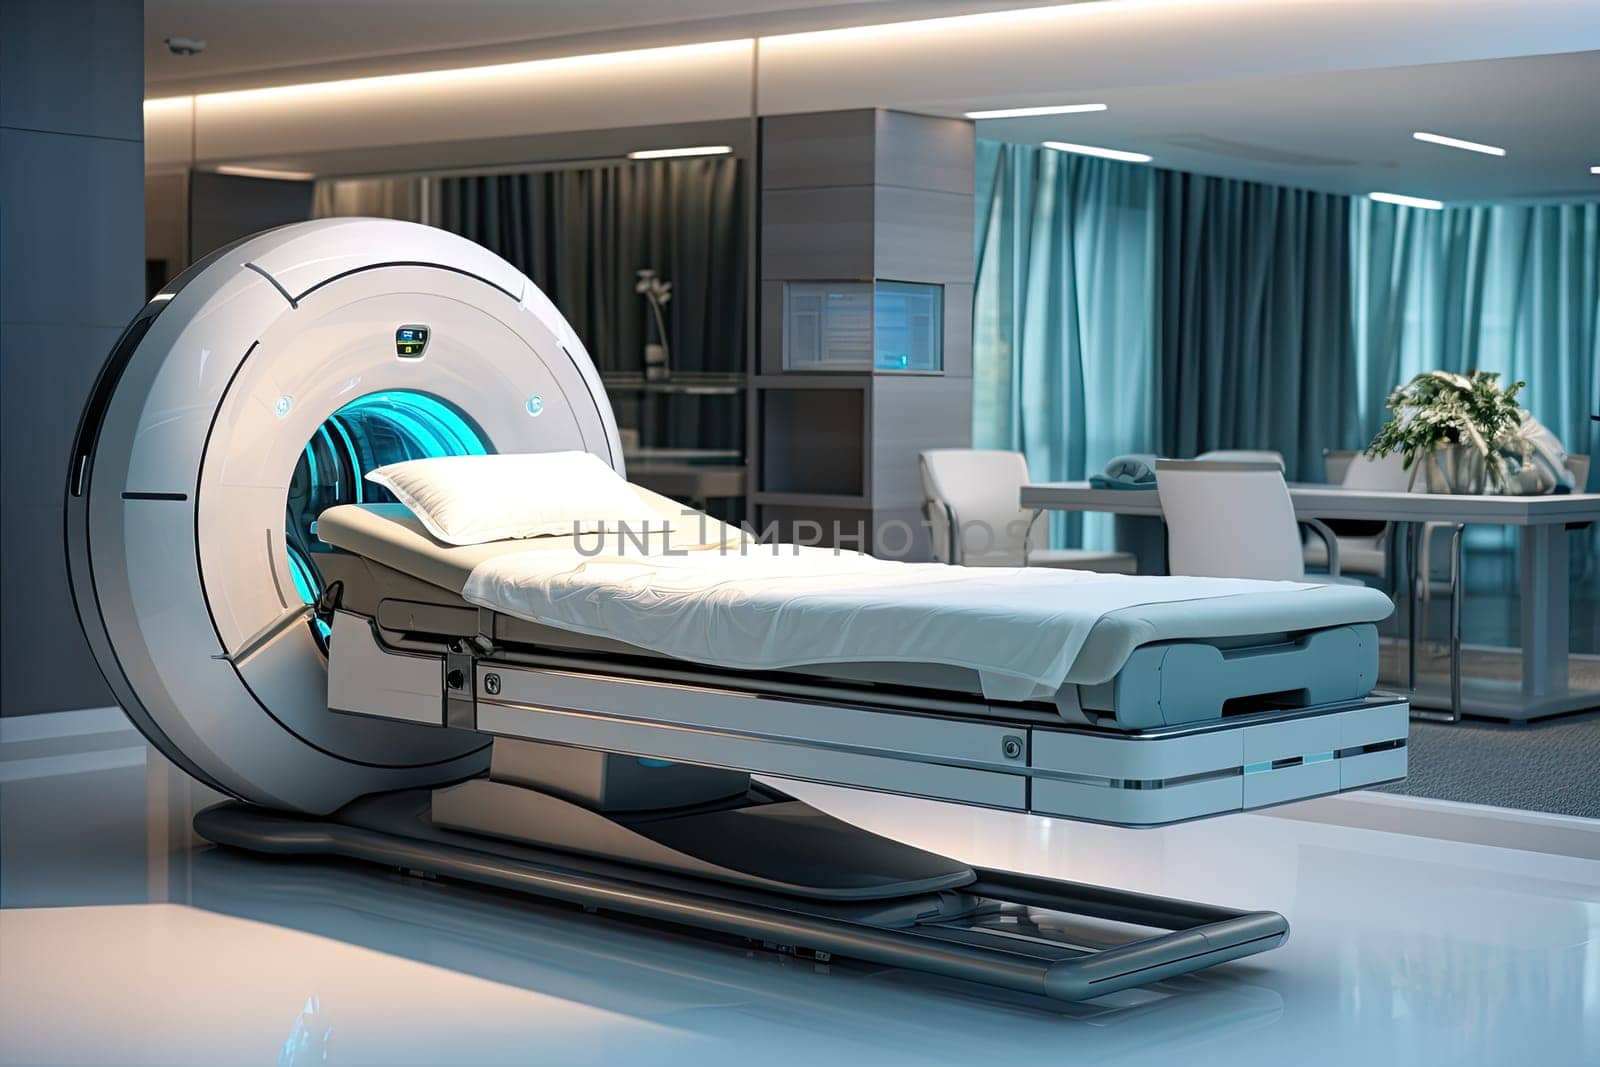 a mri machine in a hospital room by golibtolibov